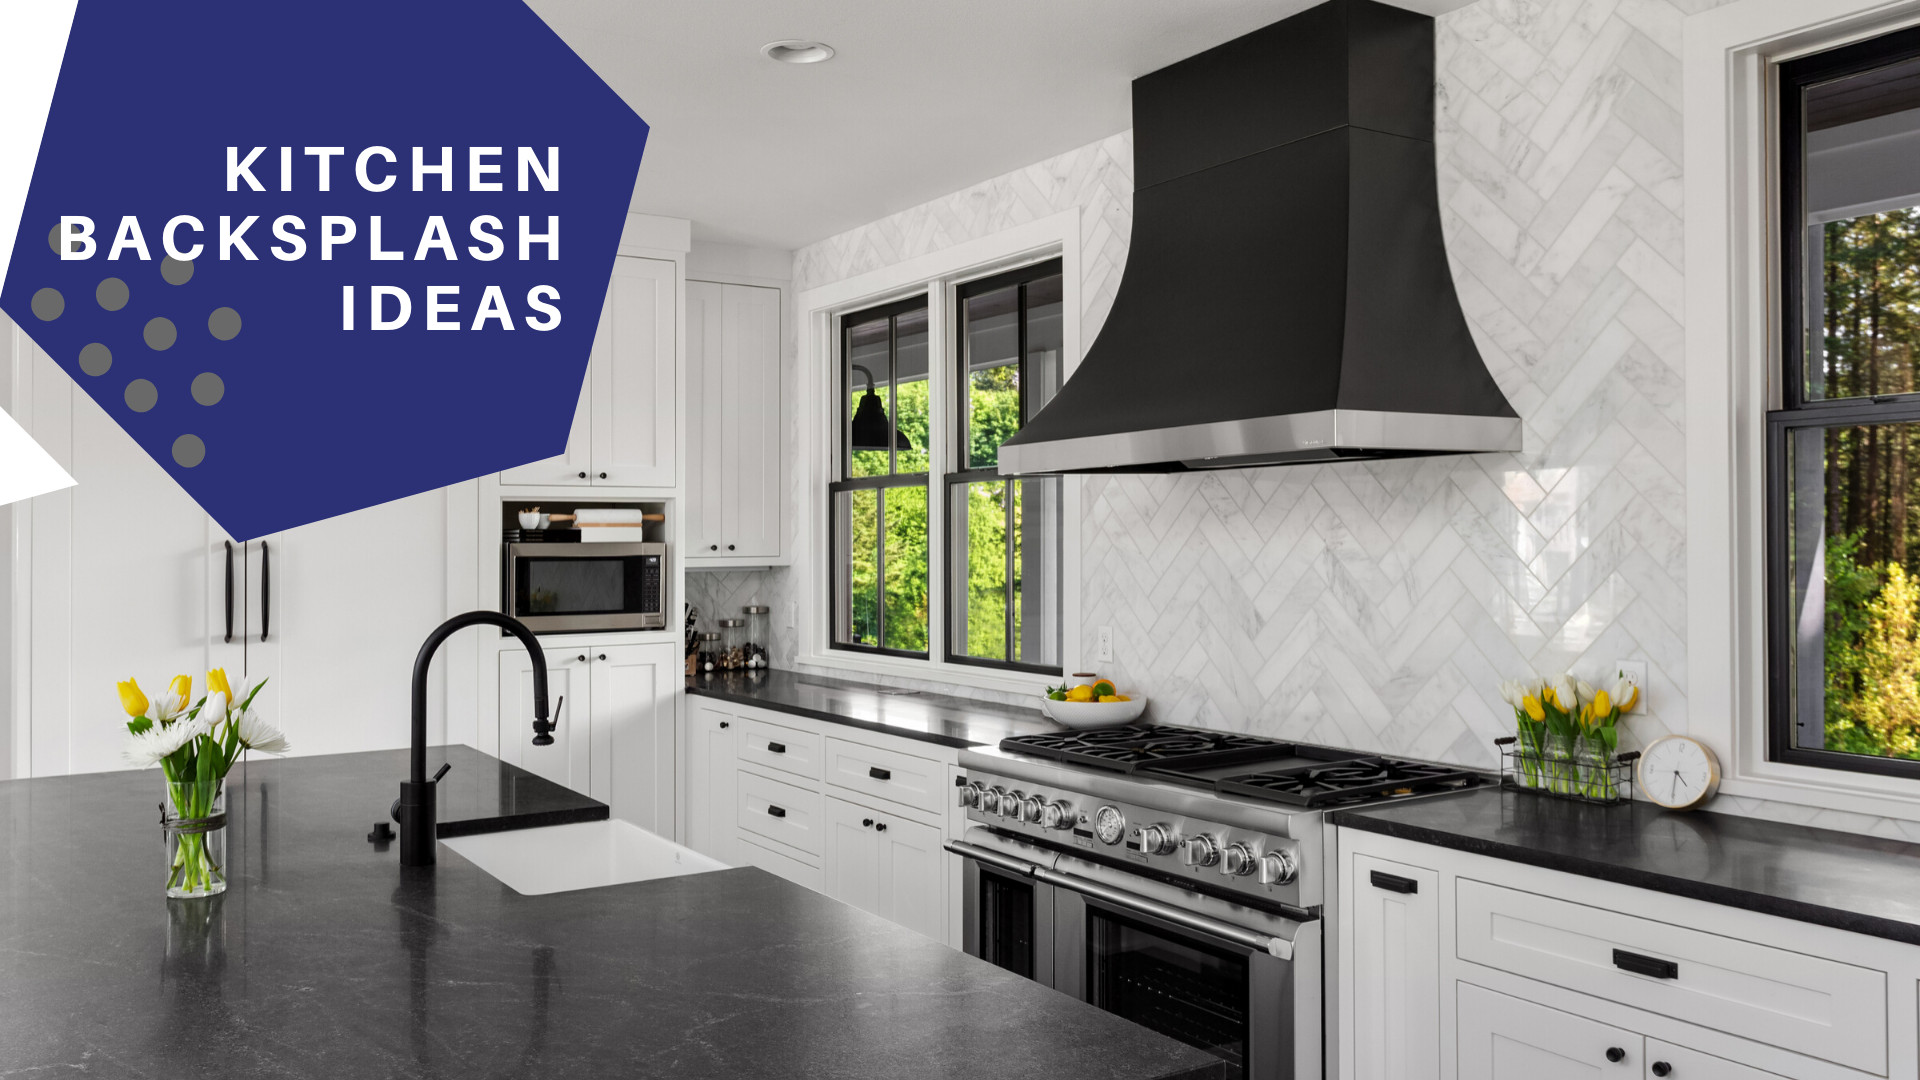 Kitchen Backsplash Ideas 2020
 Kitchen Backsplash Ideas Tile Superstore & more